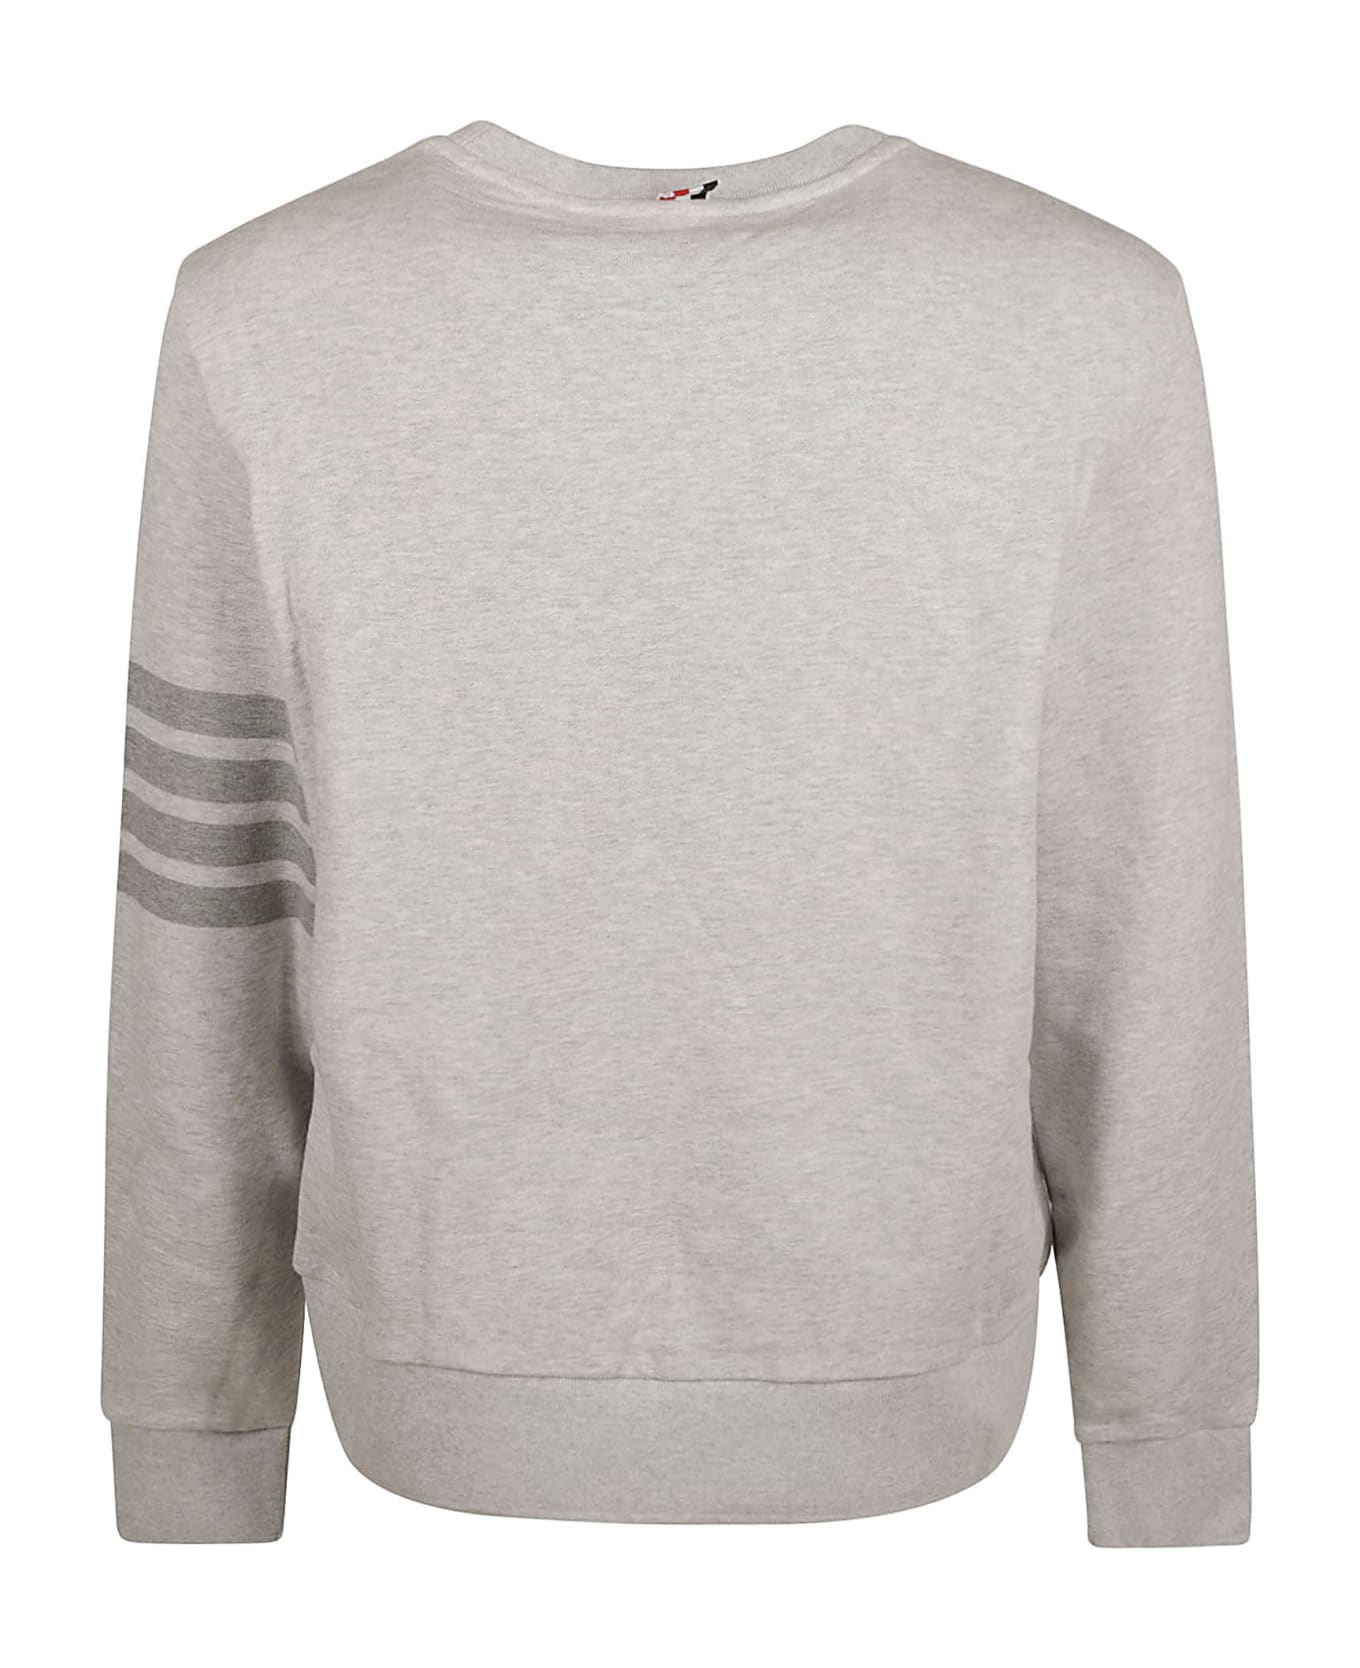 Thom Browne 4bar T-shirt - Light Grey フリース